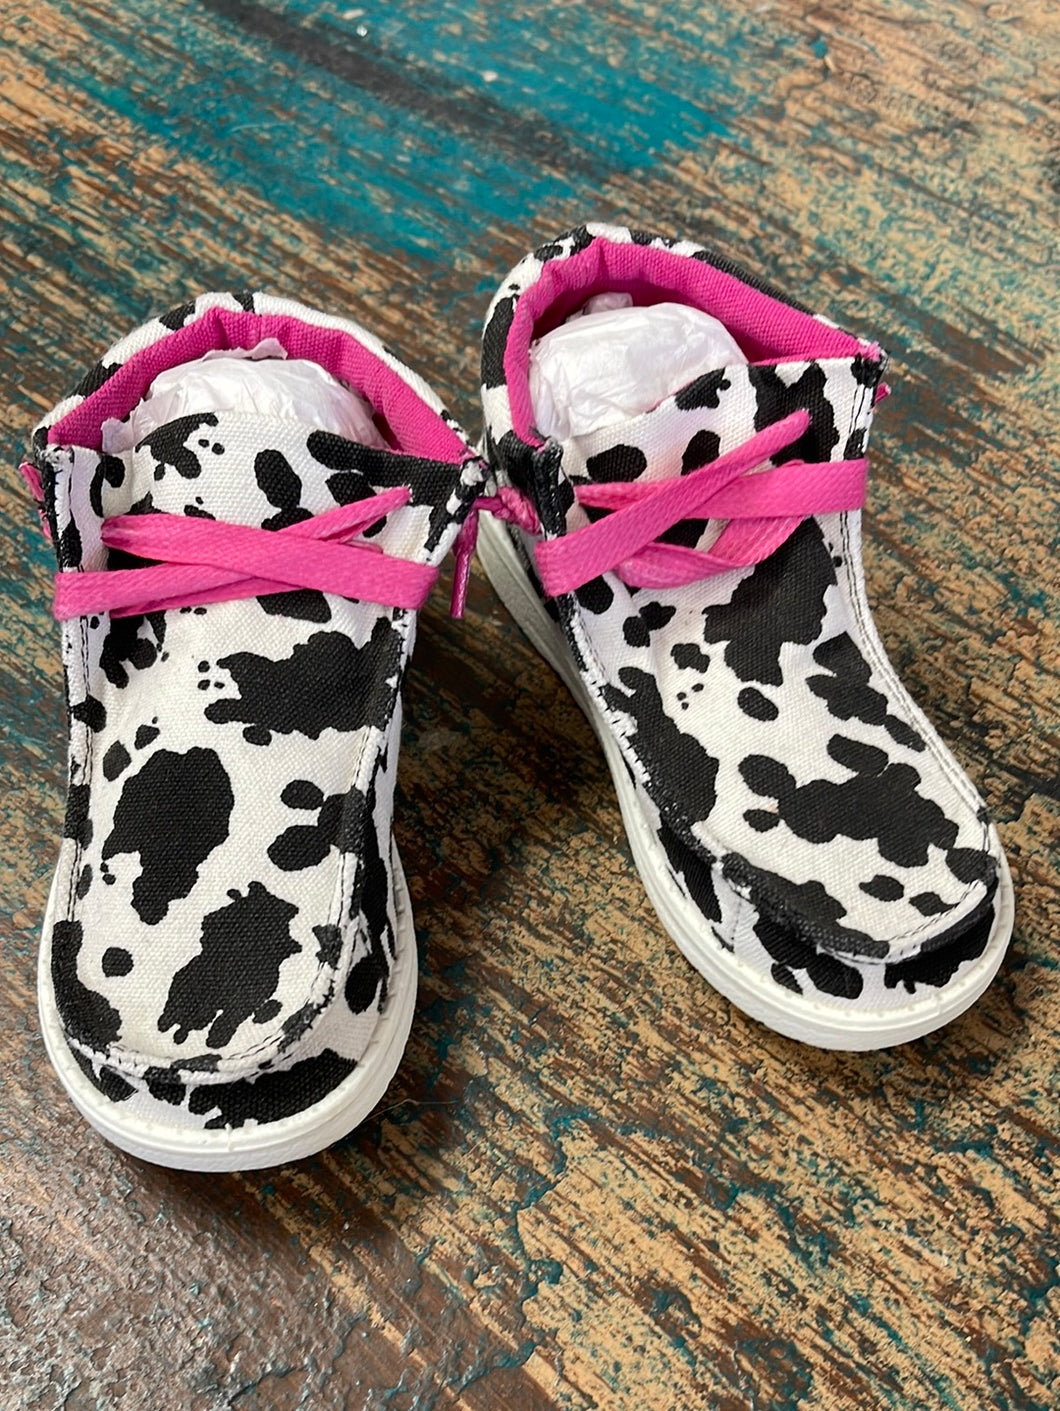 Cow print kids shoes